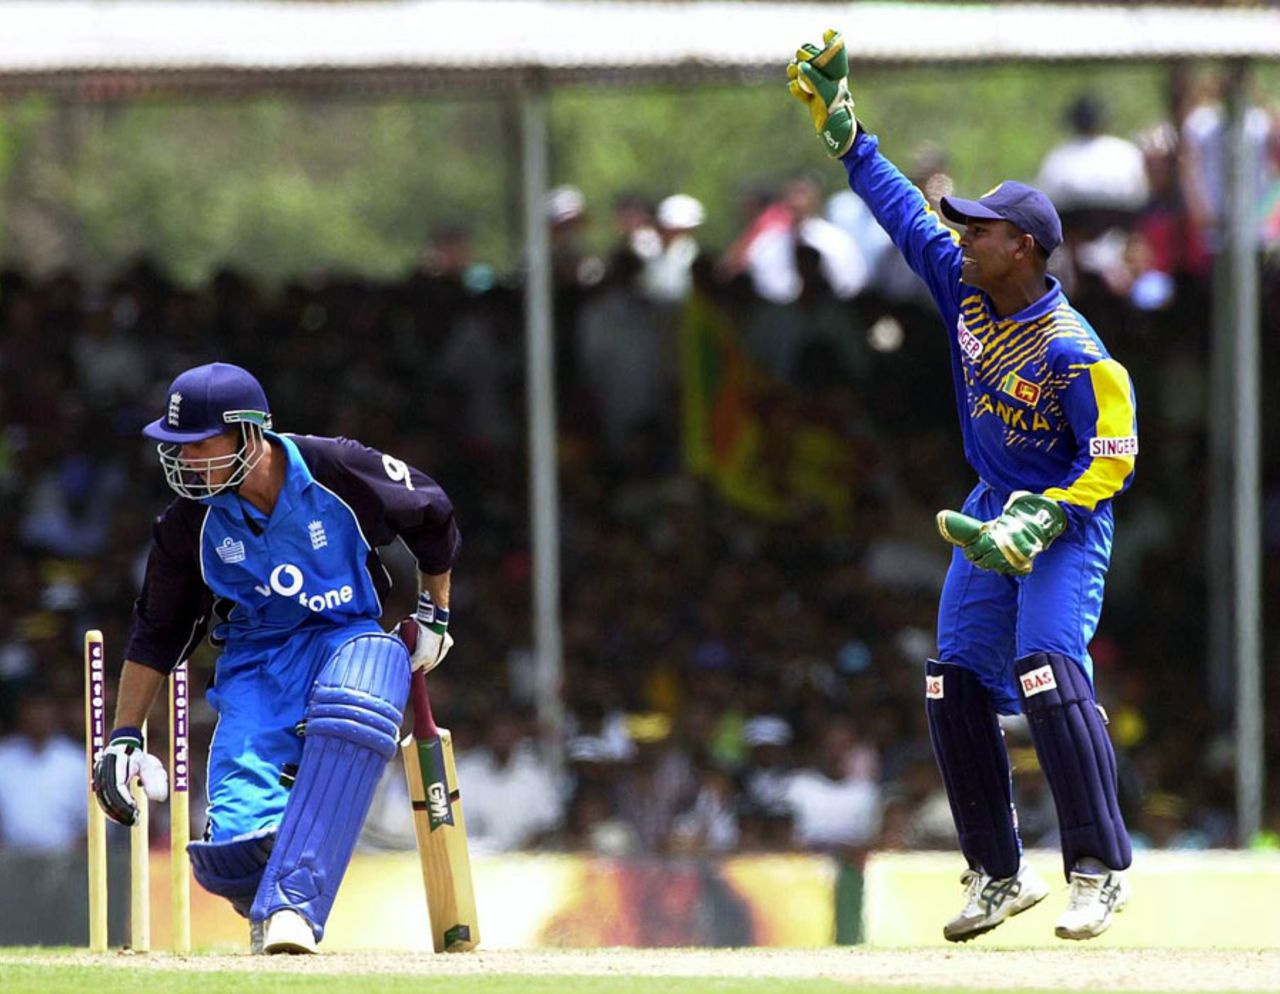 Romesh Kaluwitharana successfully appeals for a stumping against Michael Vaughan, Sri Lanka v England, 1st ODI, Dambulla, March 23, 2001